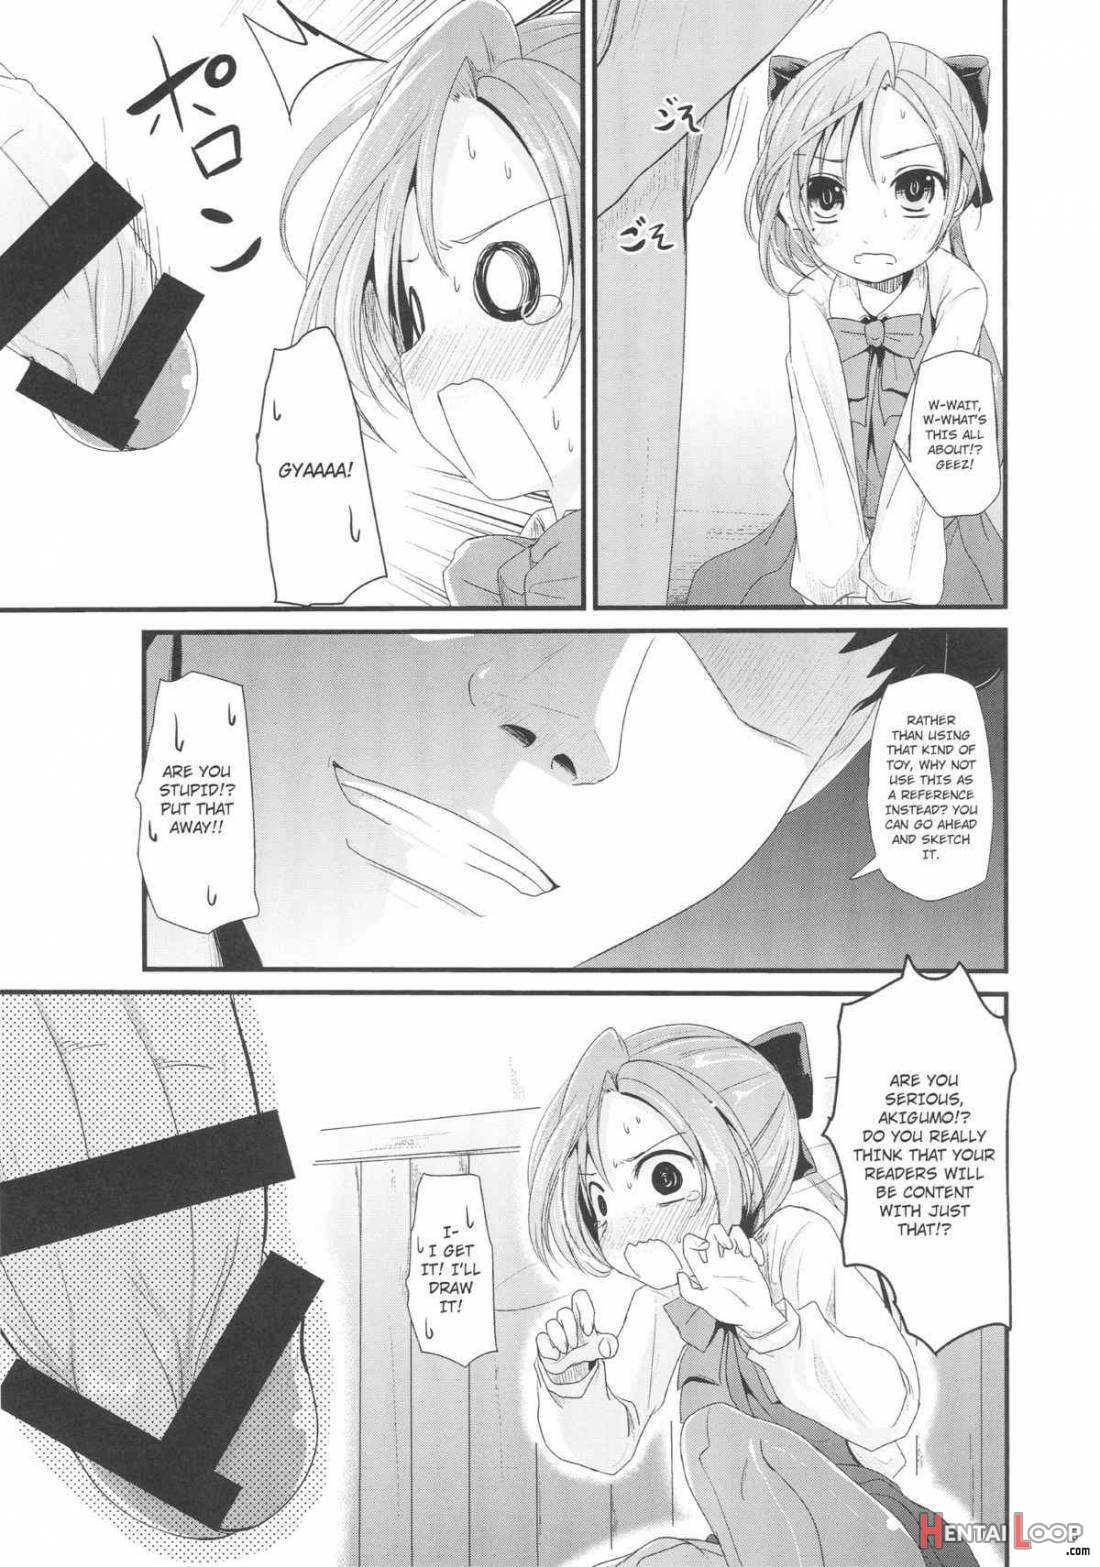 Akigumo-chance page 4